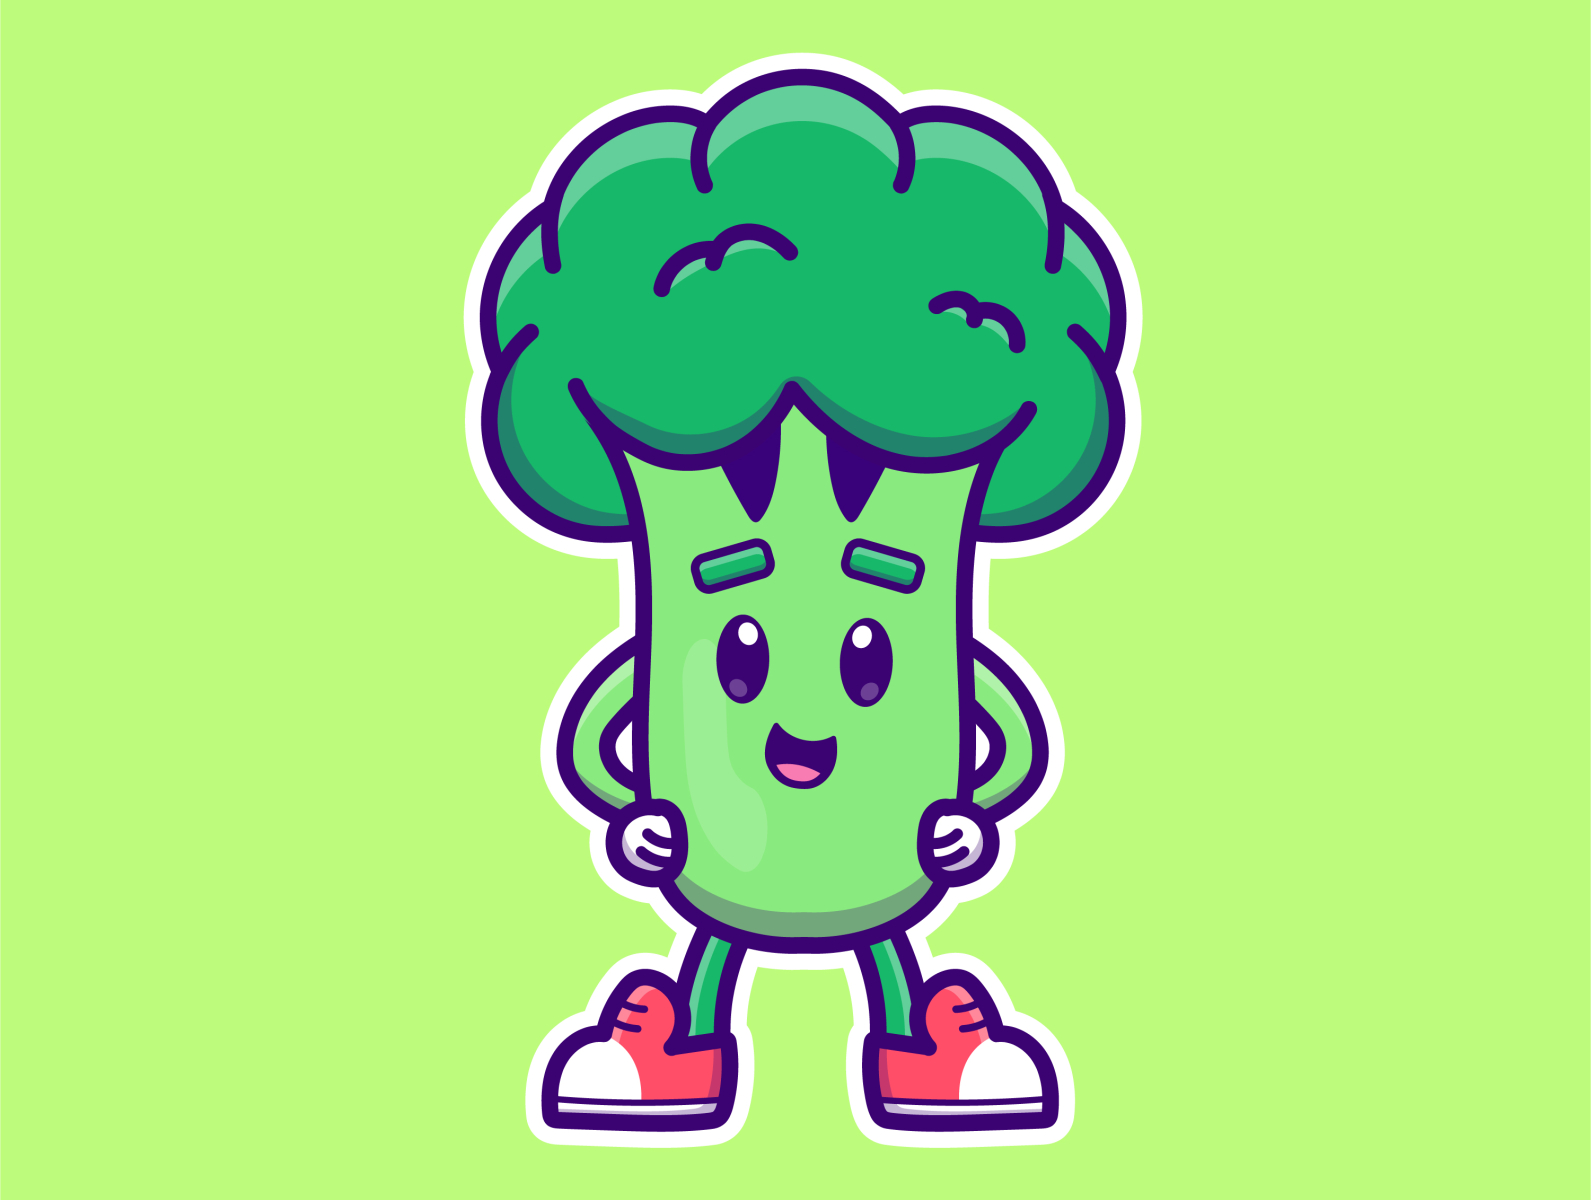 Cute cartoon broccoli by Elizaveta Udaltsova on Dribbble